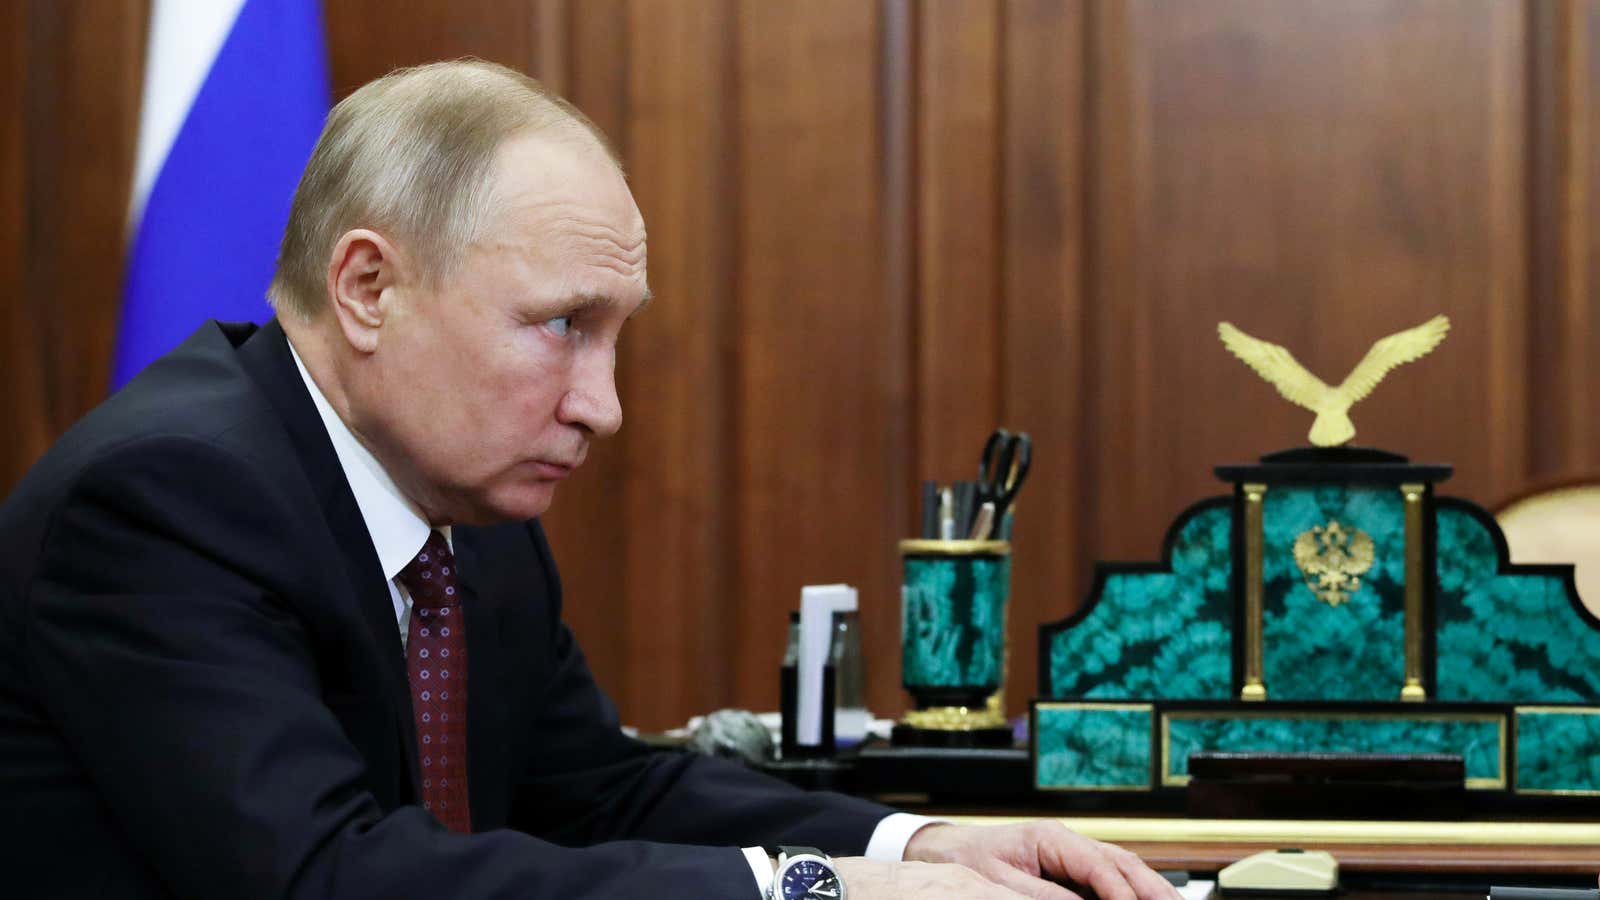 Vladimir Putin declared Covid-19 “generally under control” in Russia.